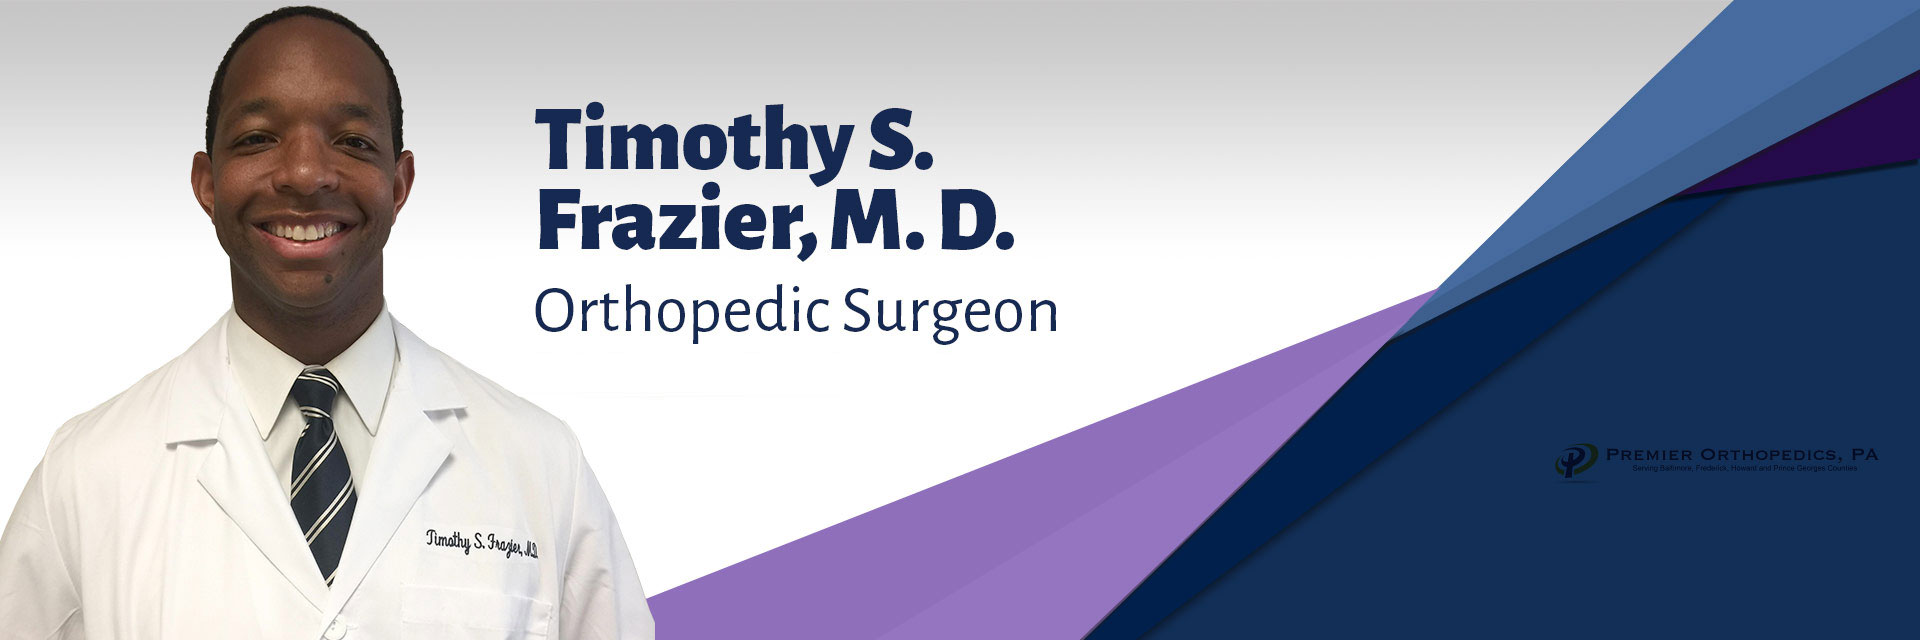 Timothy Frazier orthopedic surgeon